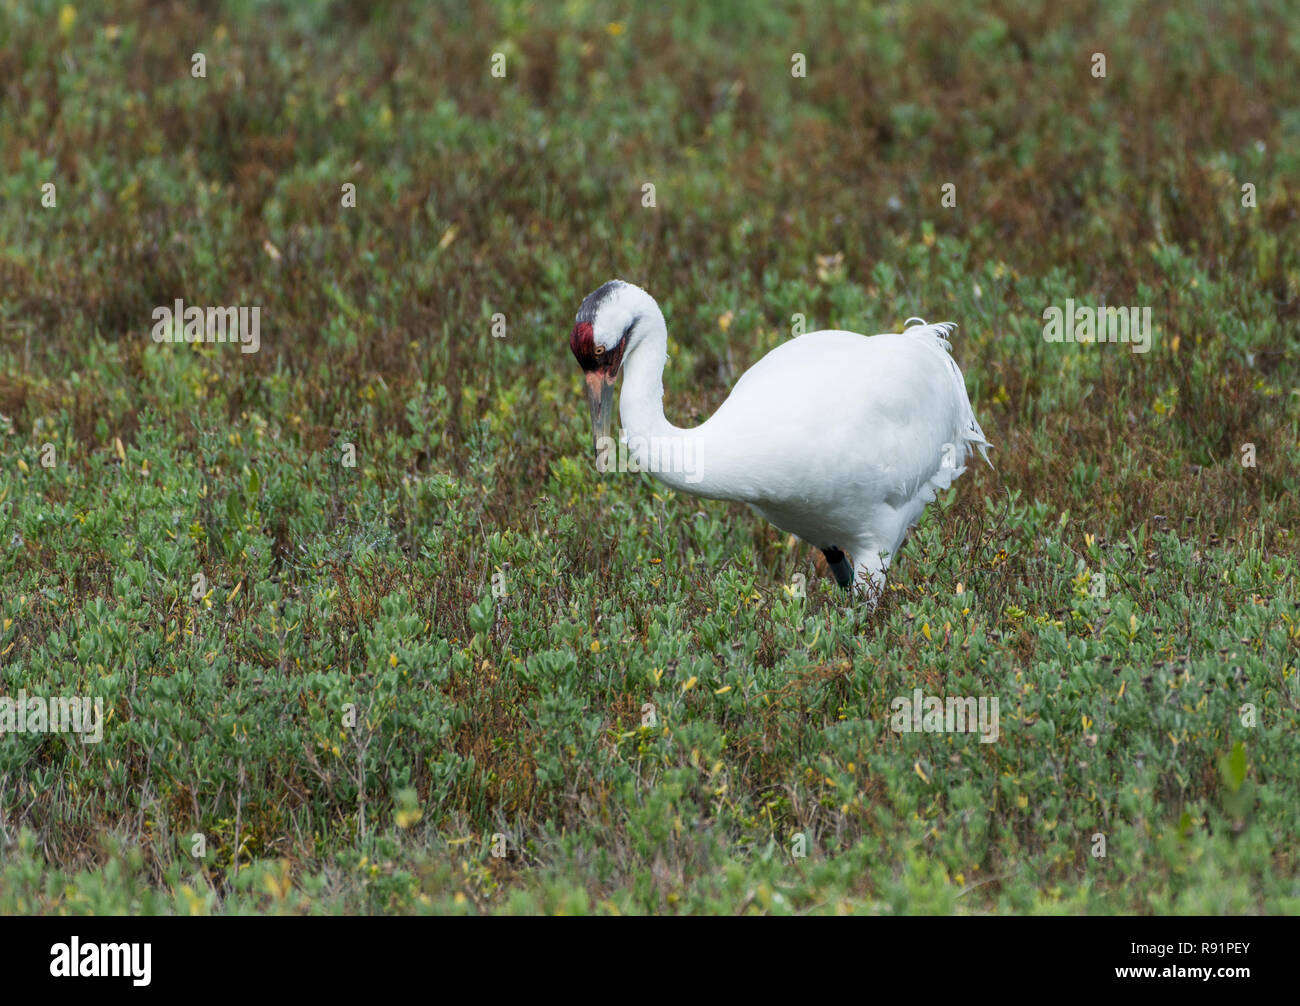 Ein erwachsener Whooping Crane (Grus americana) Nahrungssuche im Winter Lebensraum. Aransas National Wildlife Refuge, Texas, USA. Stockfoto